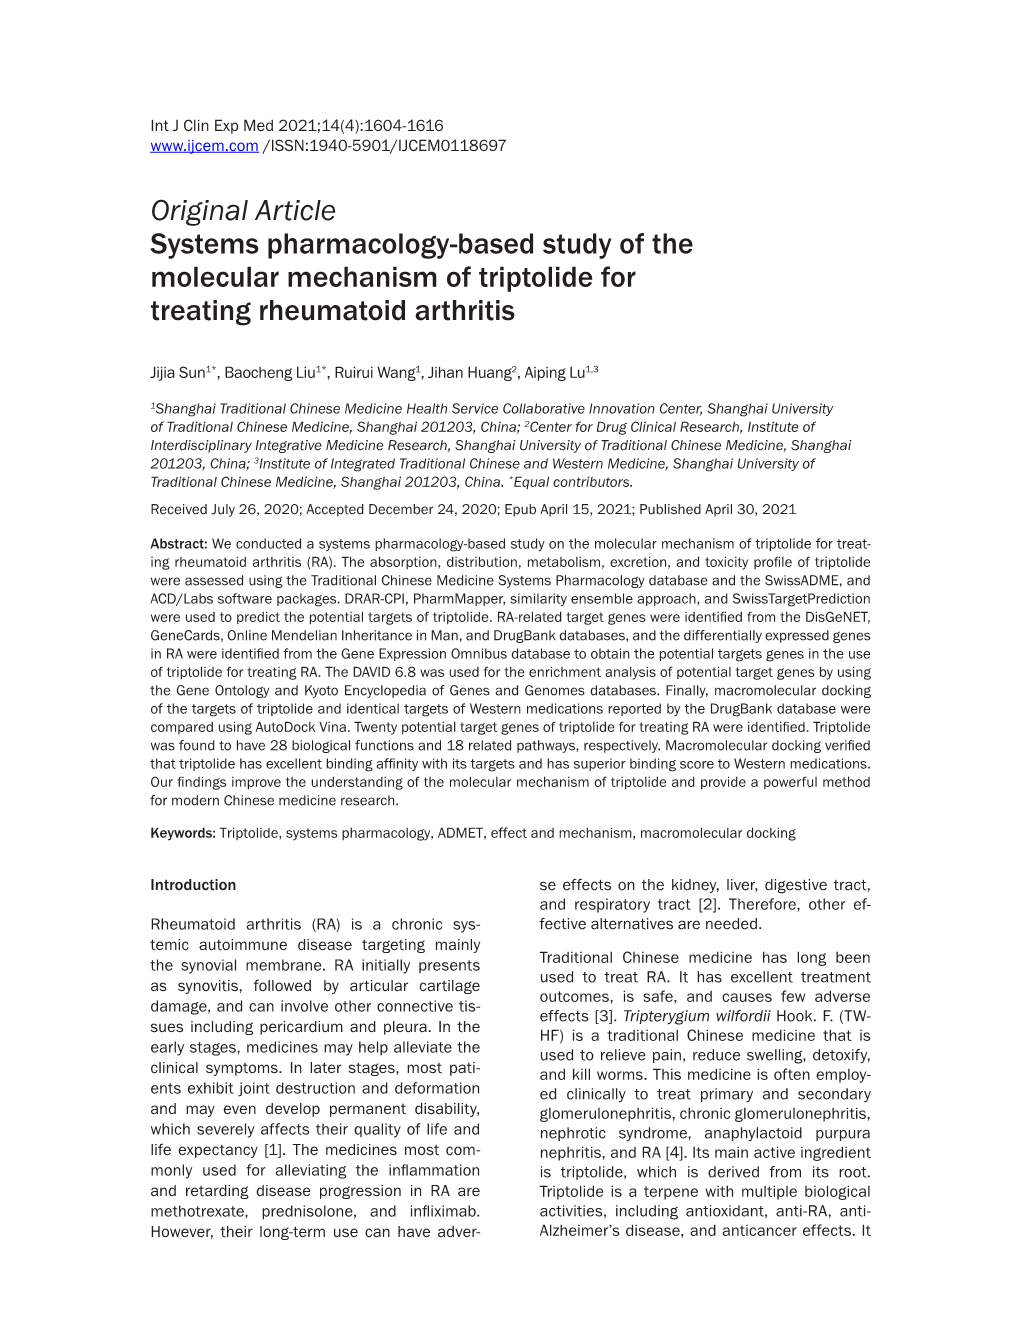 Original Article Systems Pharmacology-Based Study of the Molecular Mechanism of Triptolide for Treating Rheumatoid Arthritis